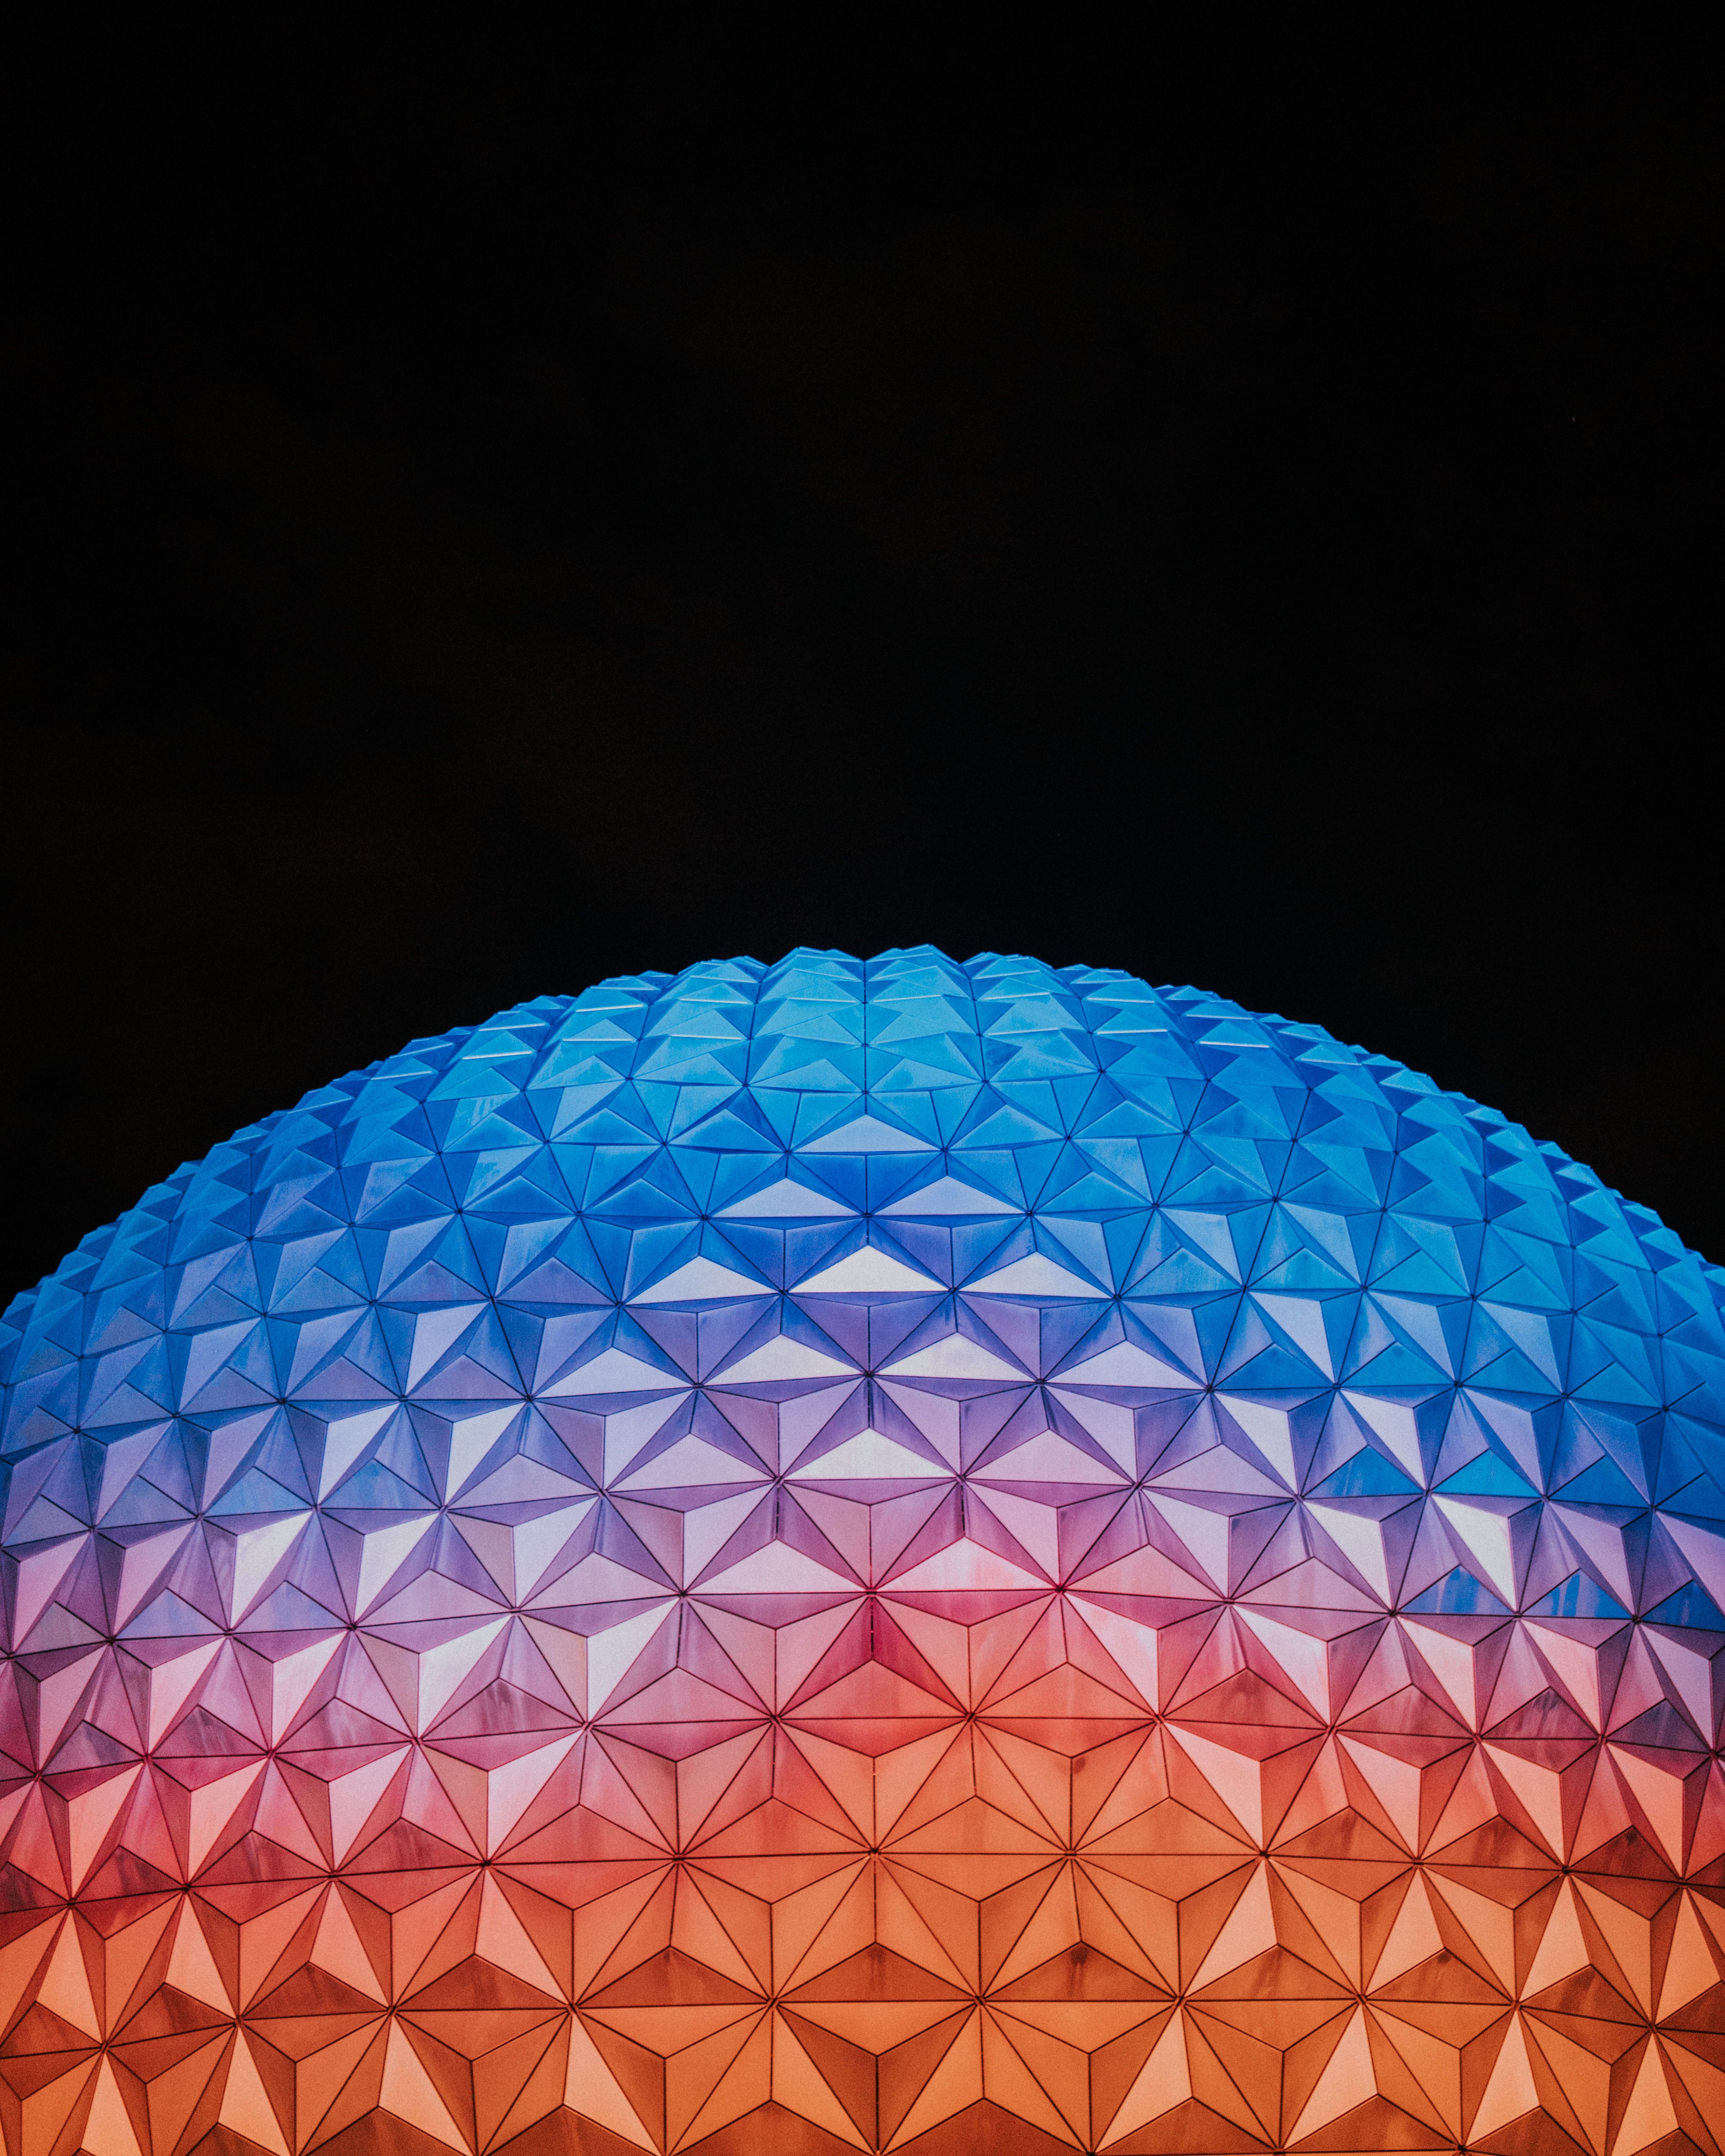 Spaceship Earth 4K Wallpaper, Epcot, Walt Disney World, Modern architecture, 5K, Abstract